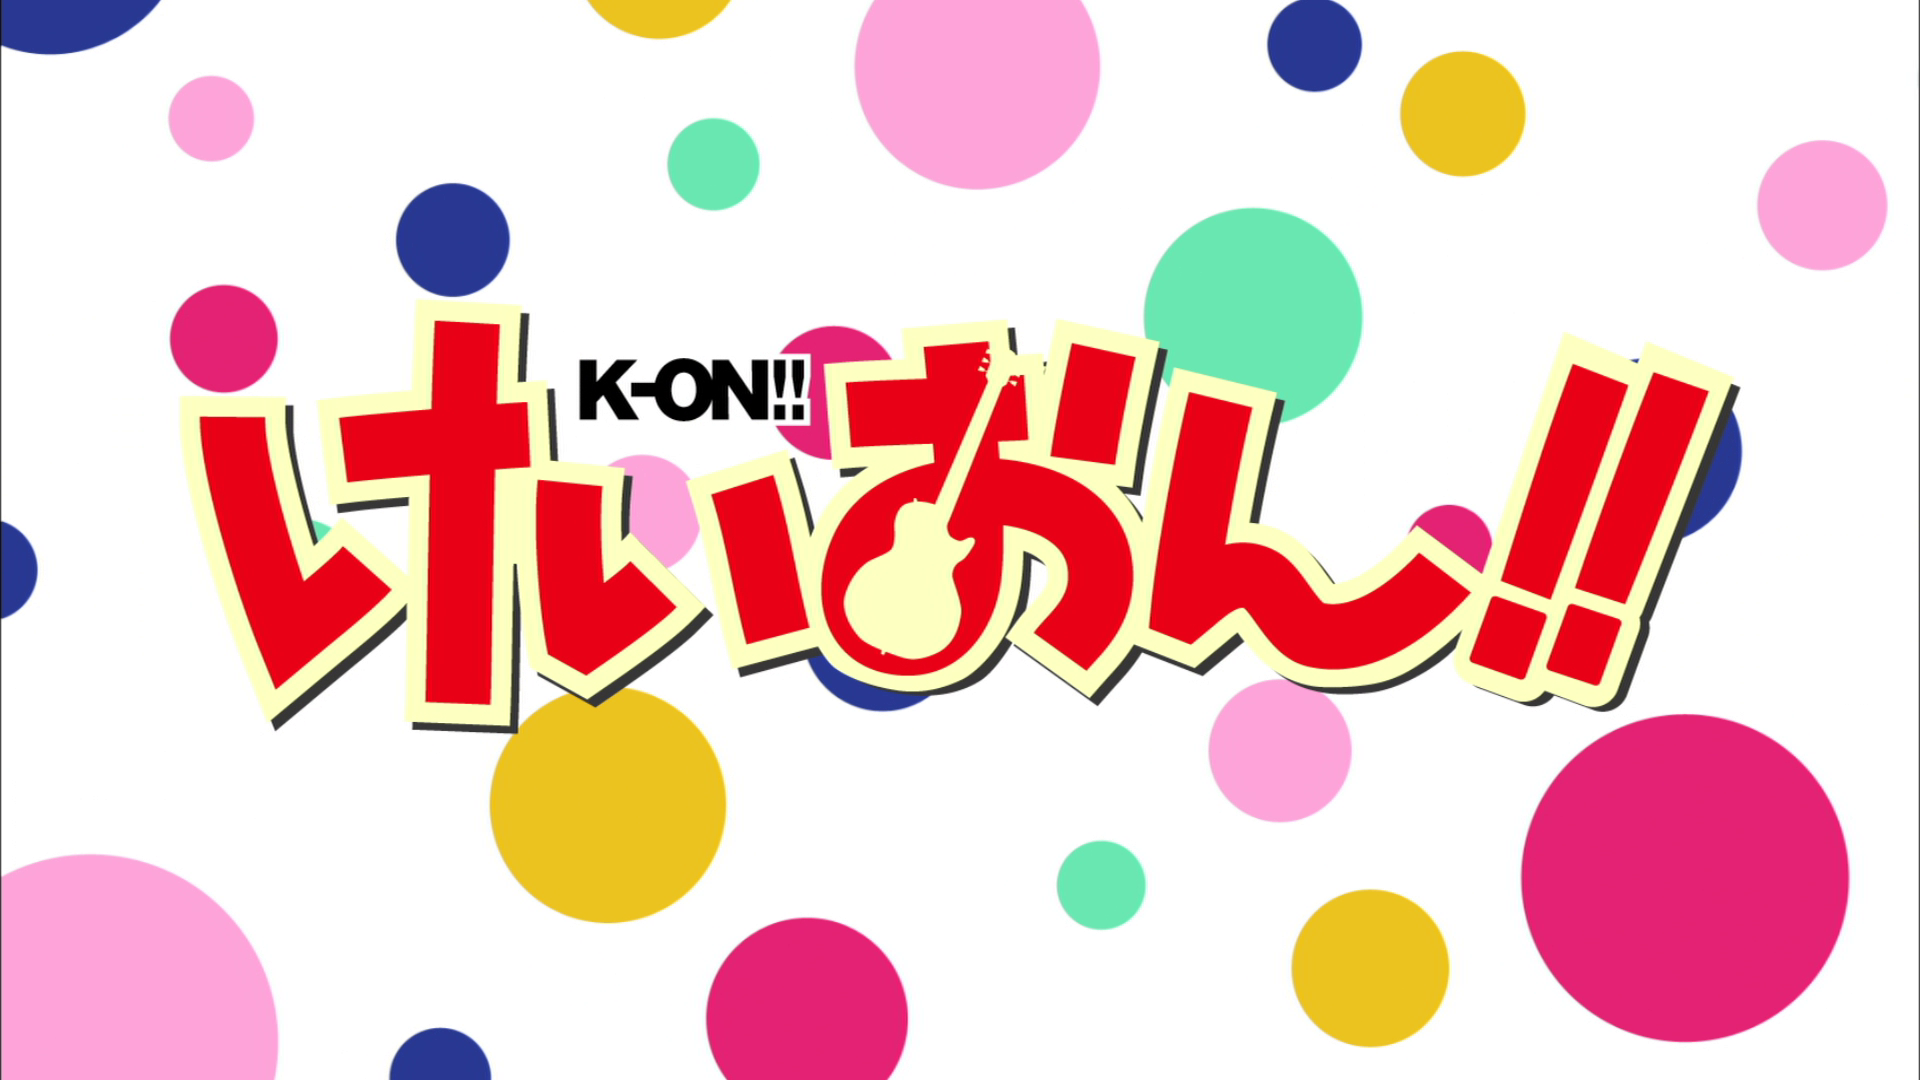 K-On! Complete Series 2 [DVD]